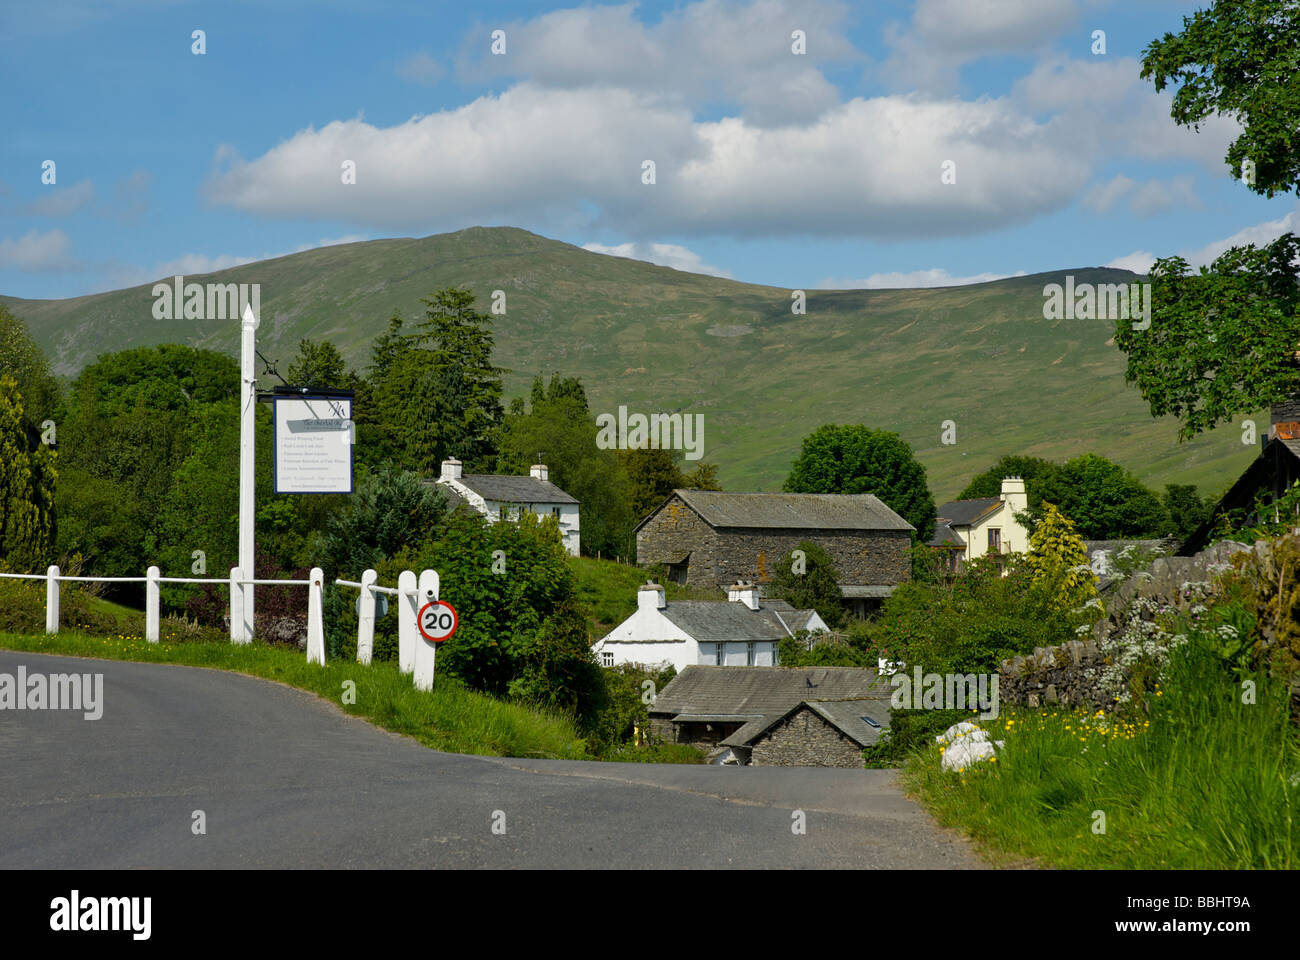 Sign for pub, the Mortal Man, Troutbeck village, near Ambleside, Lake District National Park, England UK Stock Photo